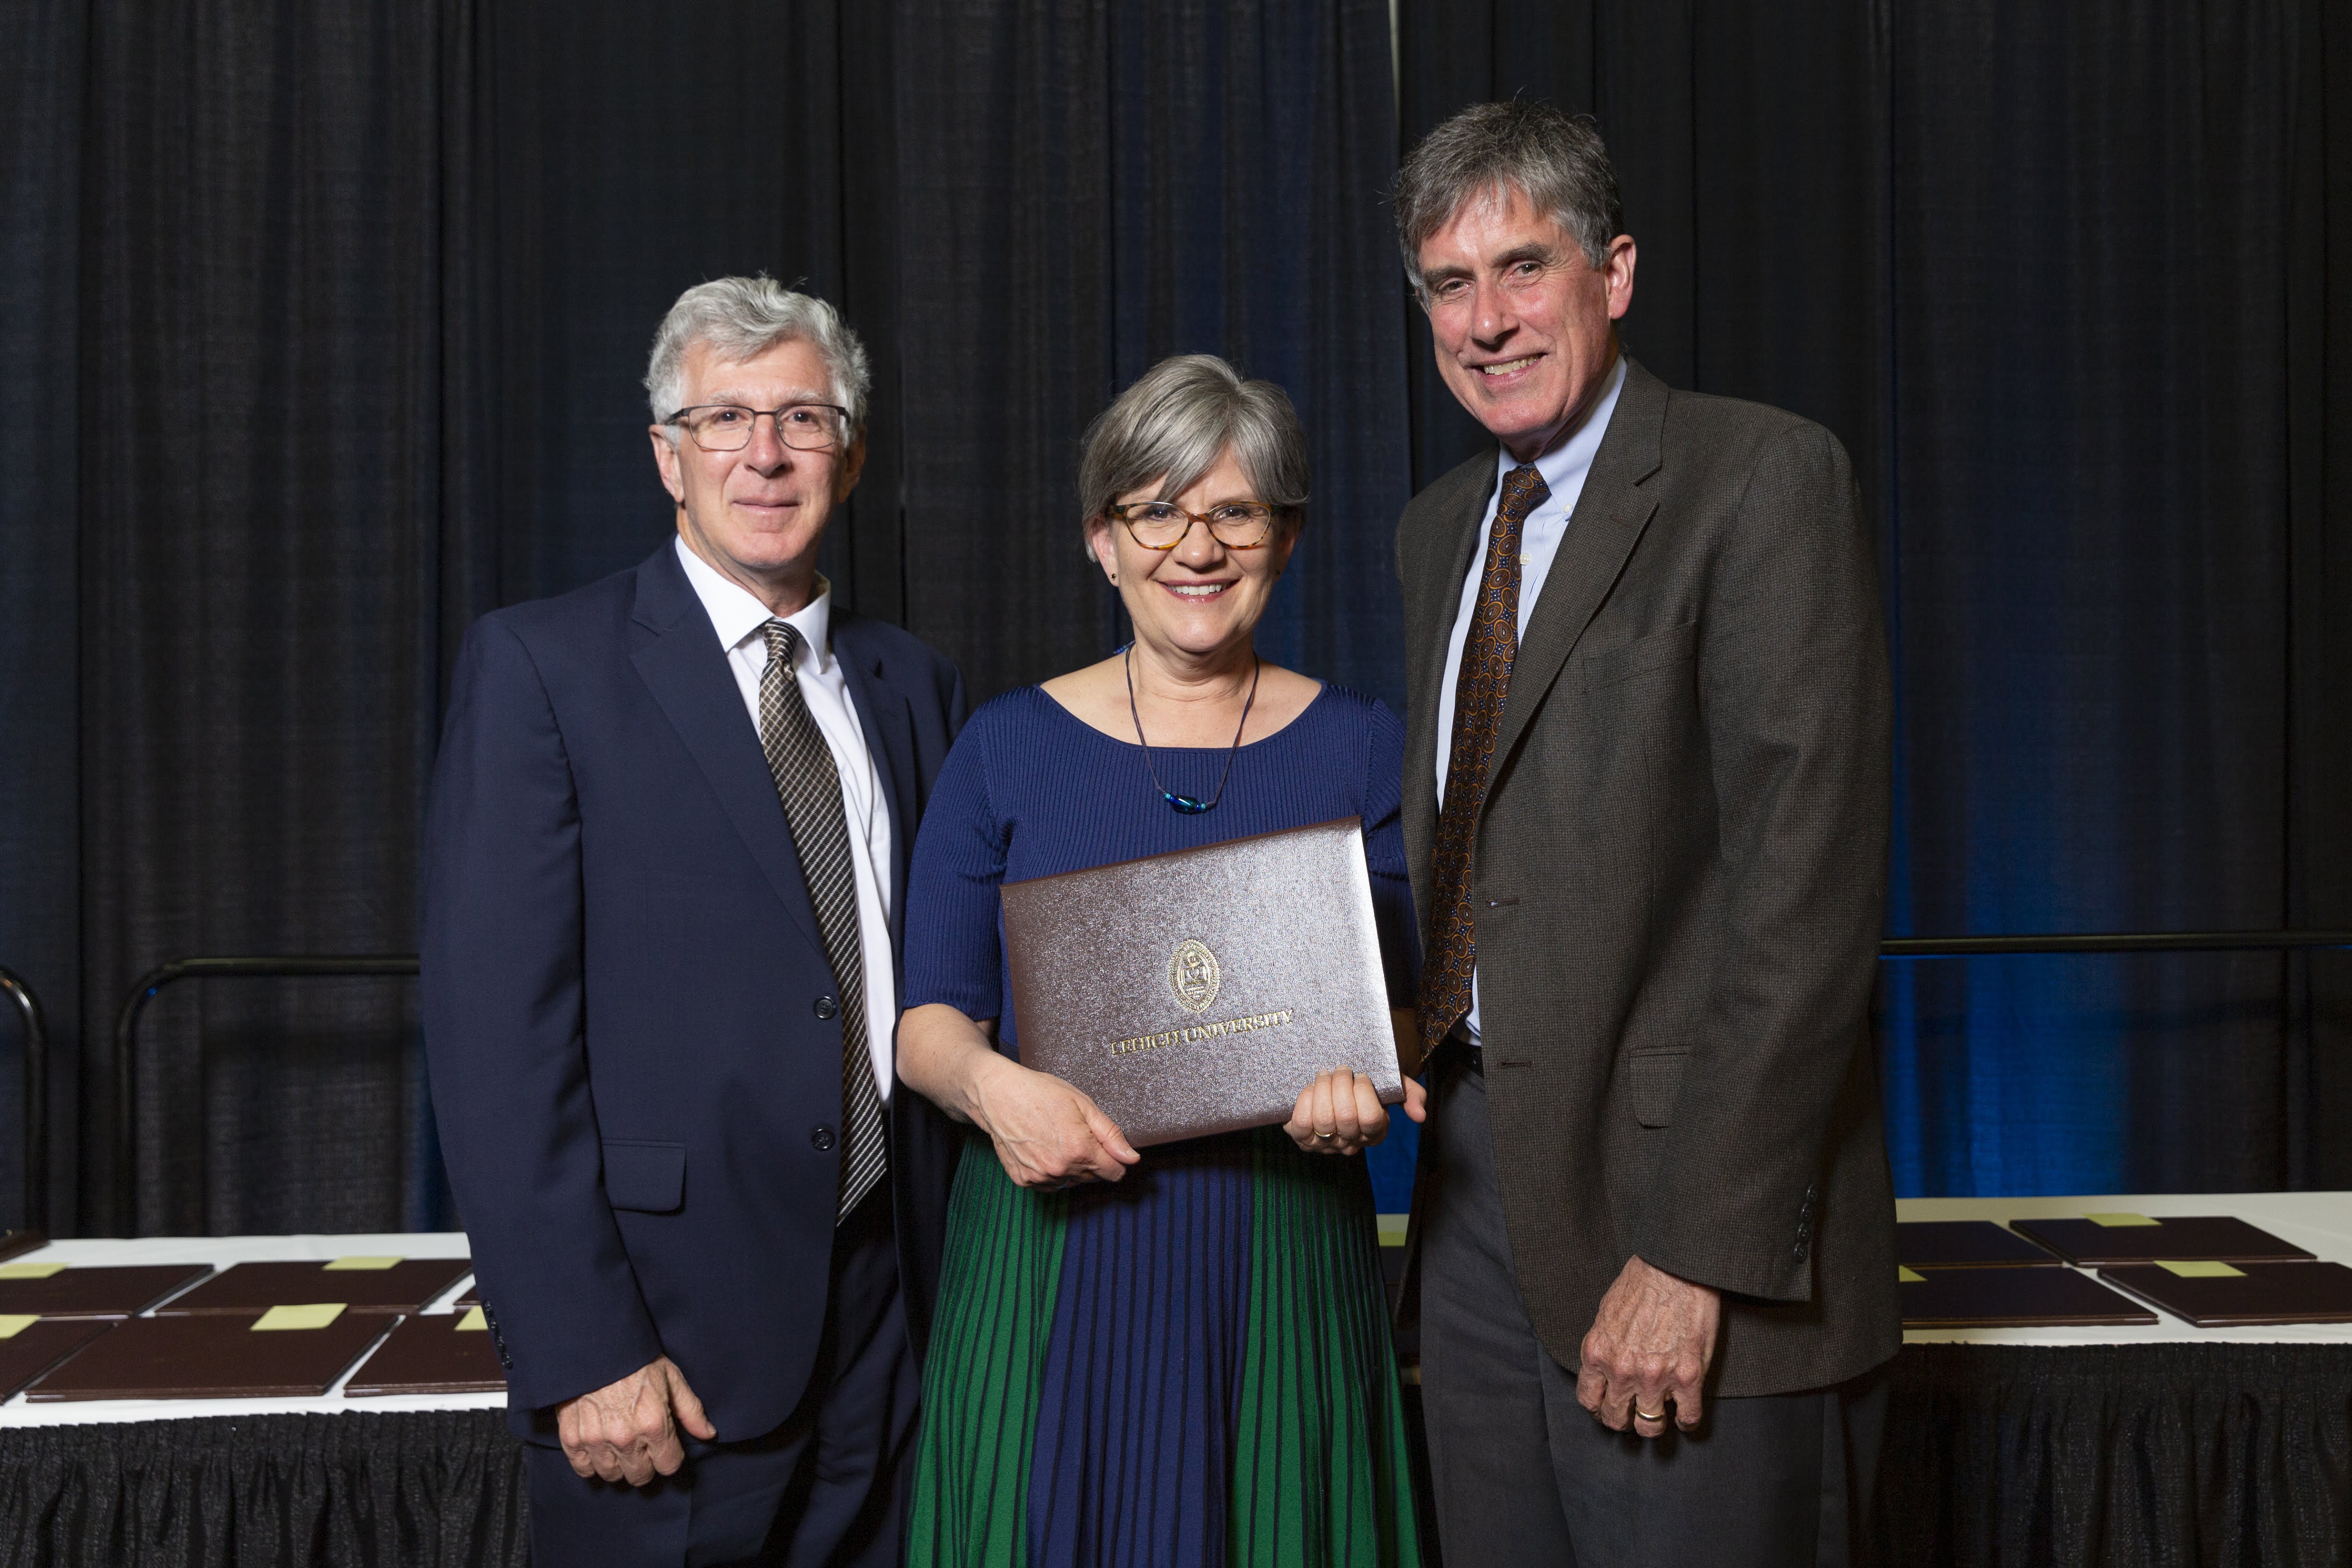 Kathleen Hutnik receives a 2019 Lehigh University Award from President John Simon and Provost Pat Farrell.